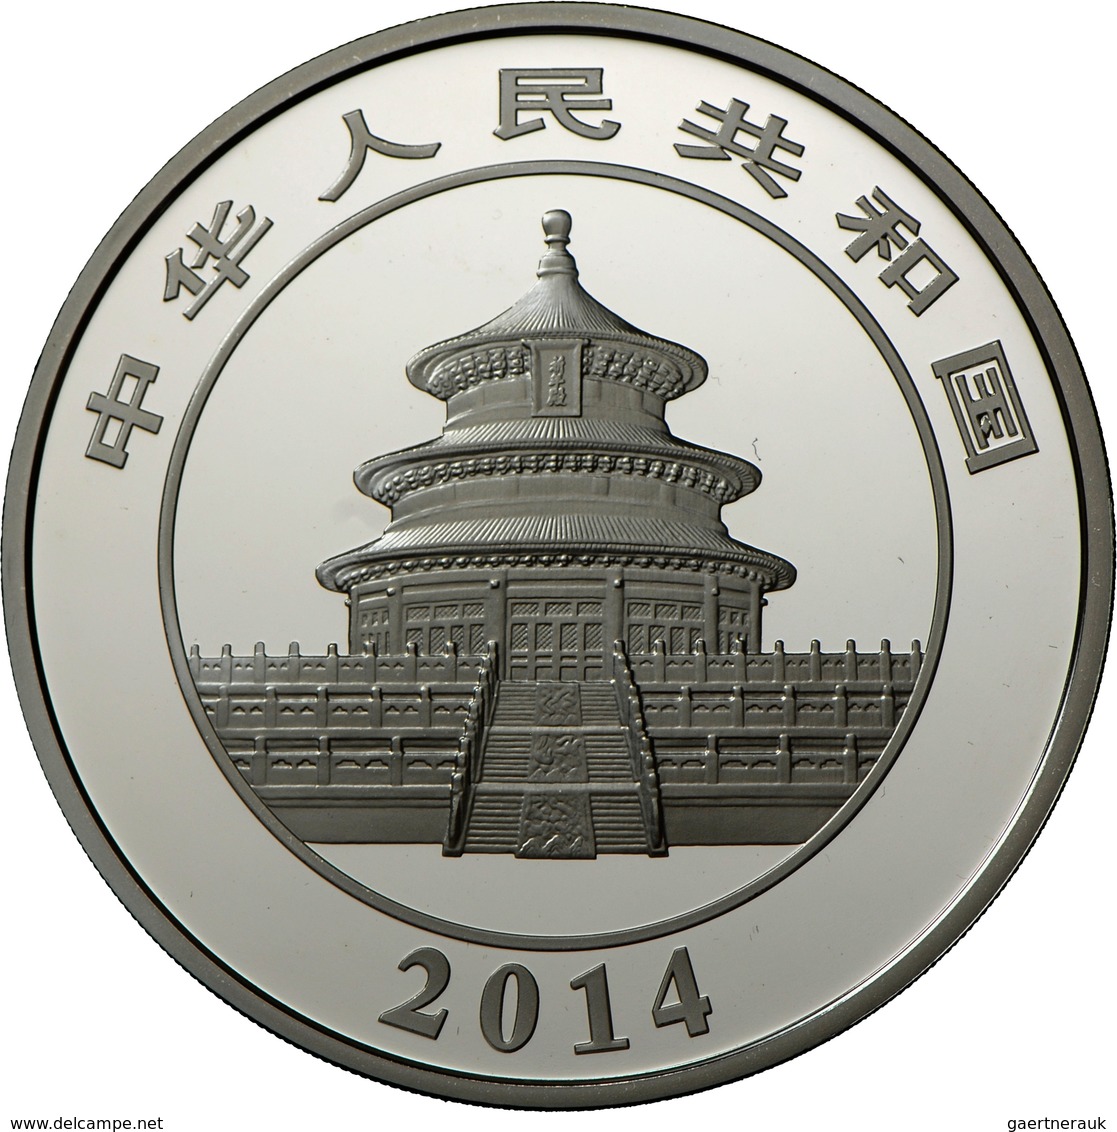 China - Volksrepublik: 50 Yuan 2014, Silber Panda, 5 OZ 999/1000 Silber. Inklusive Zertifikat, Etui - China